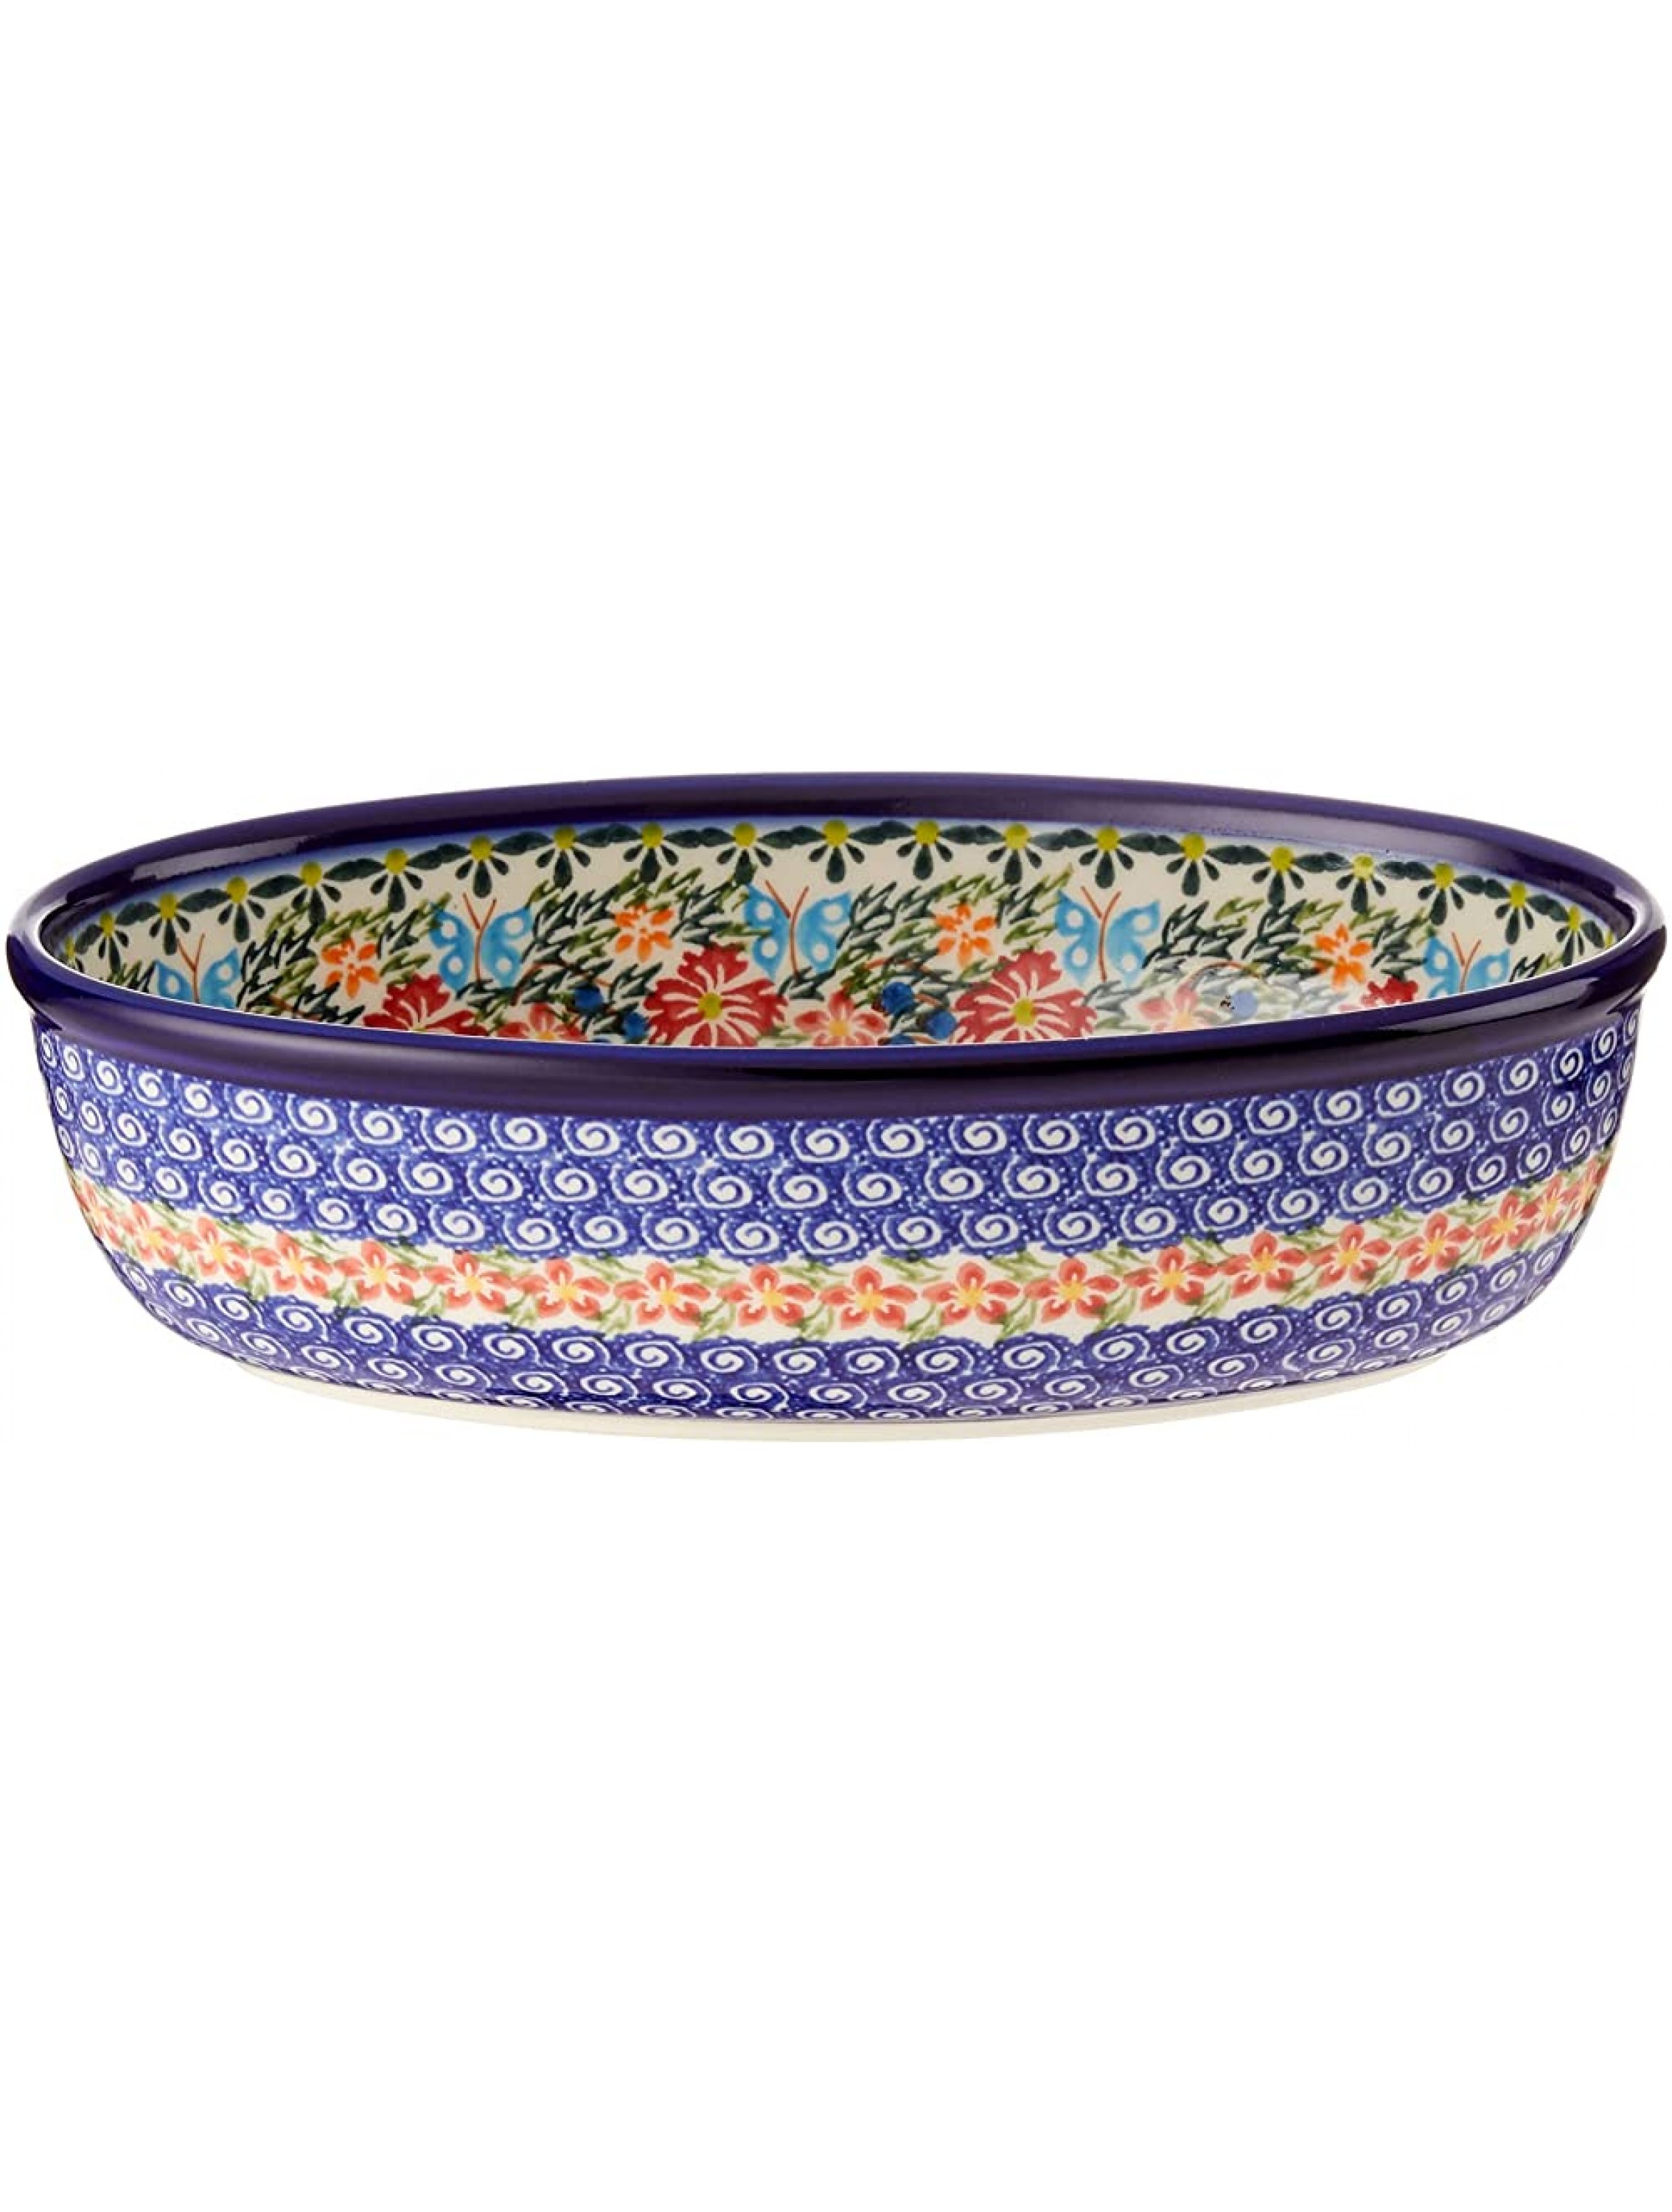 Polish Pottery Ceramika Boleslawiec Oval Mirek Baker 2 9-2 3-Inch by 6-7 10-Inch 5 Cups Royal Blue Patterns with Red Cornflower and Blue Butterflies Motif - BZ1HTCB8A